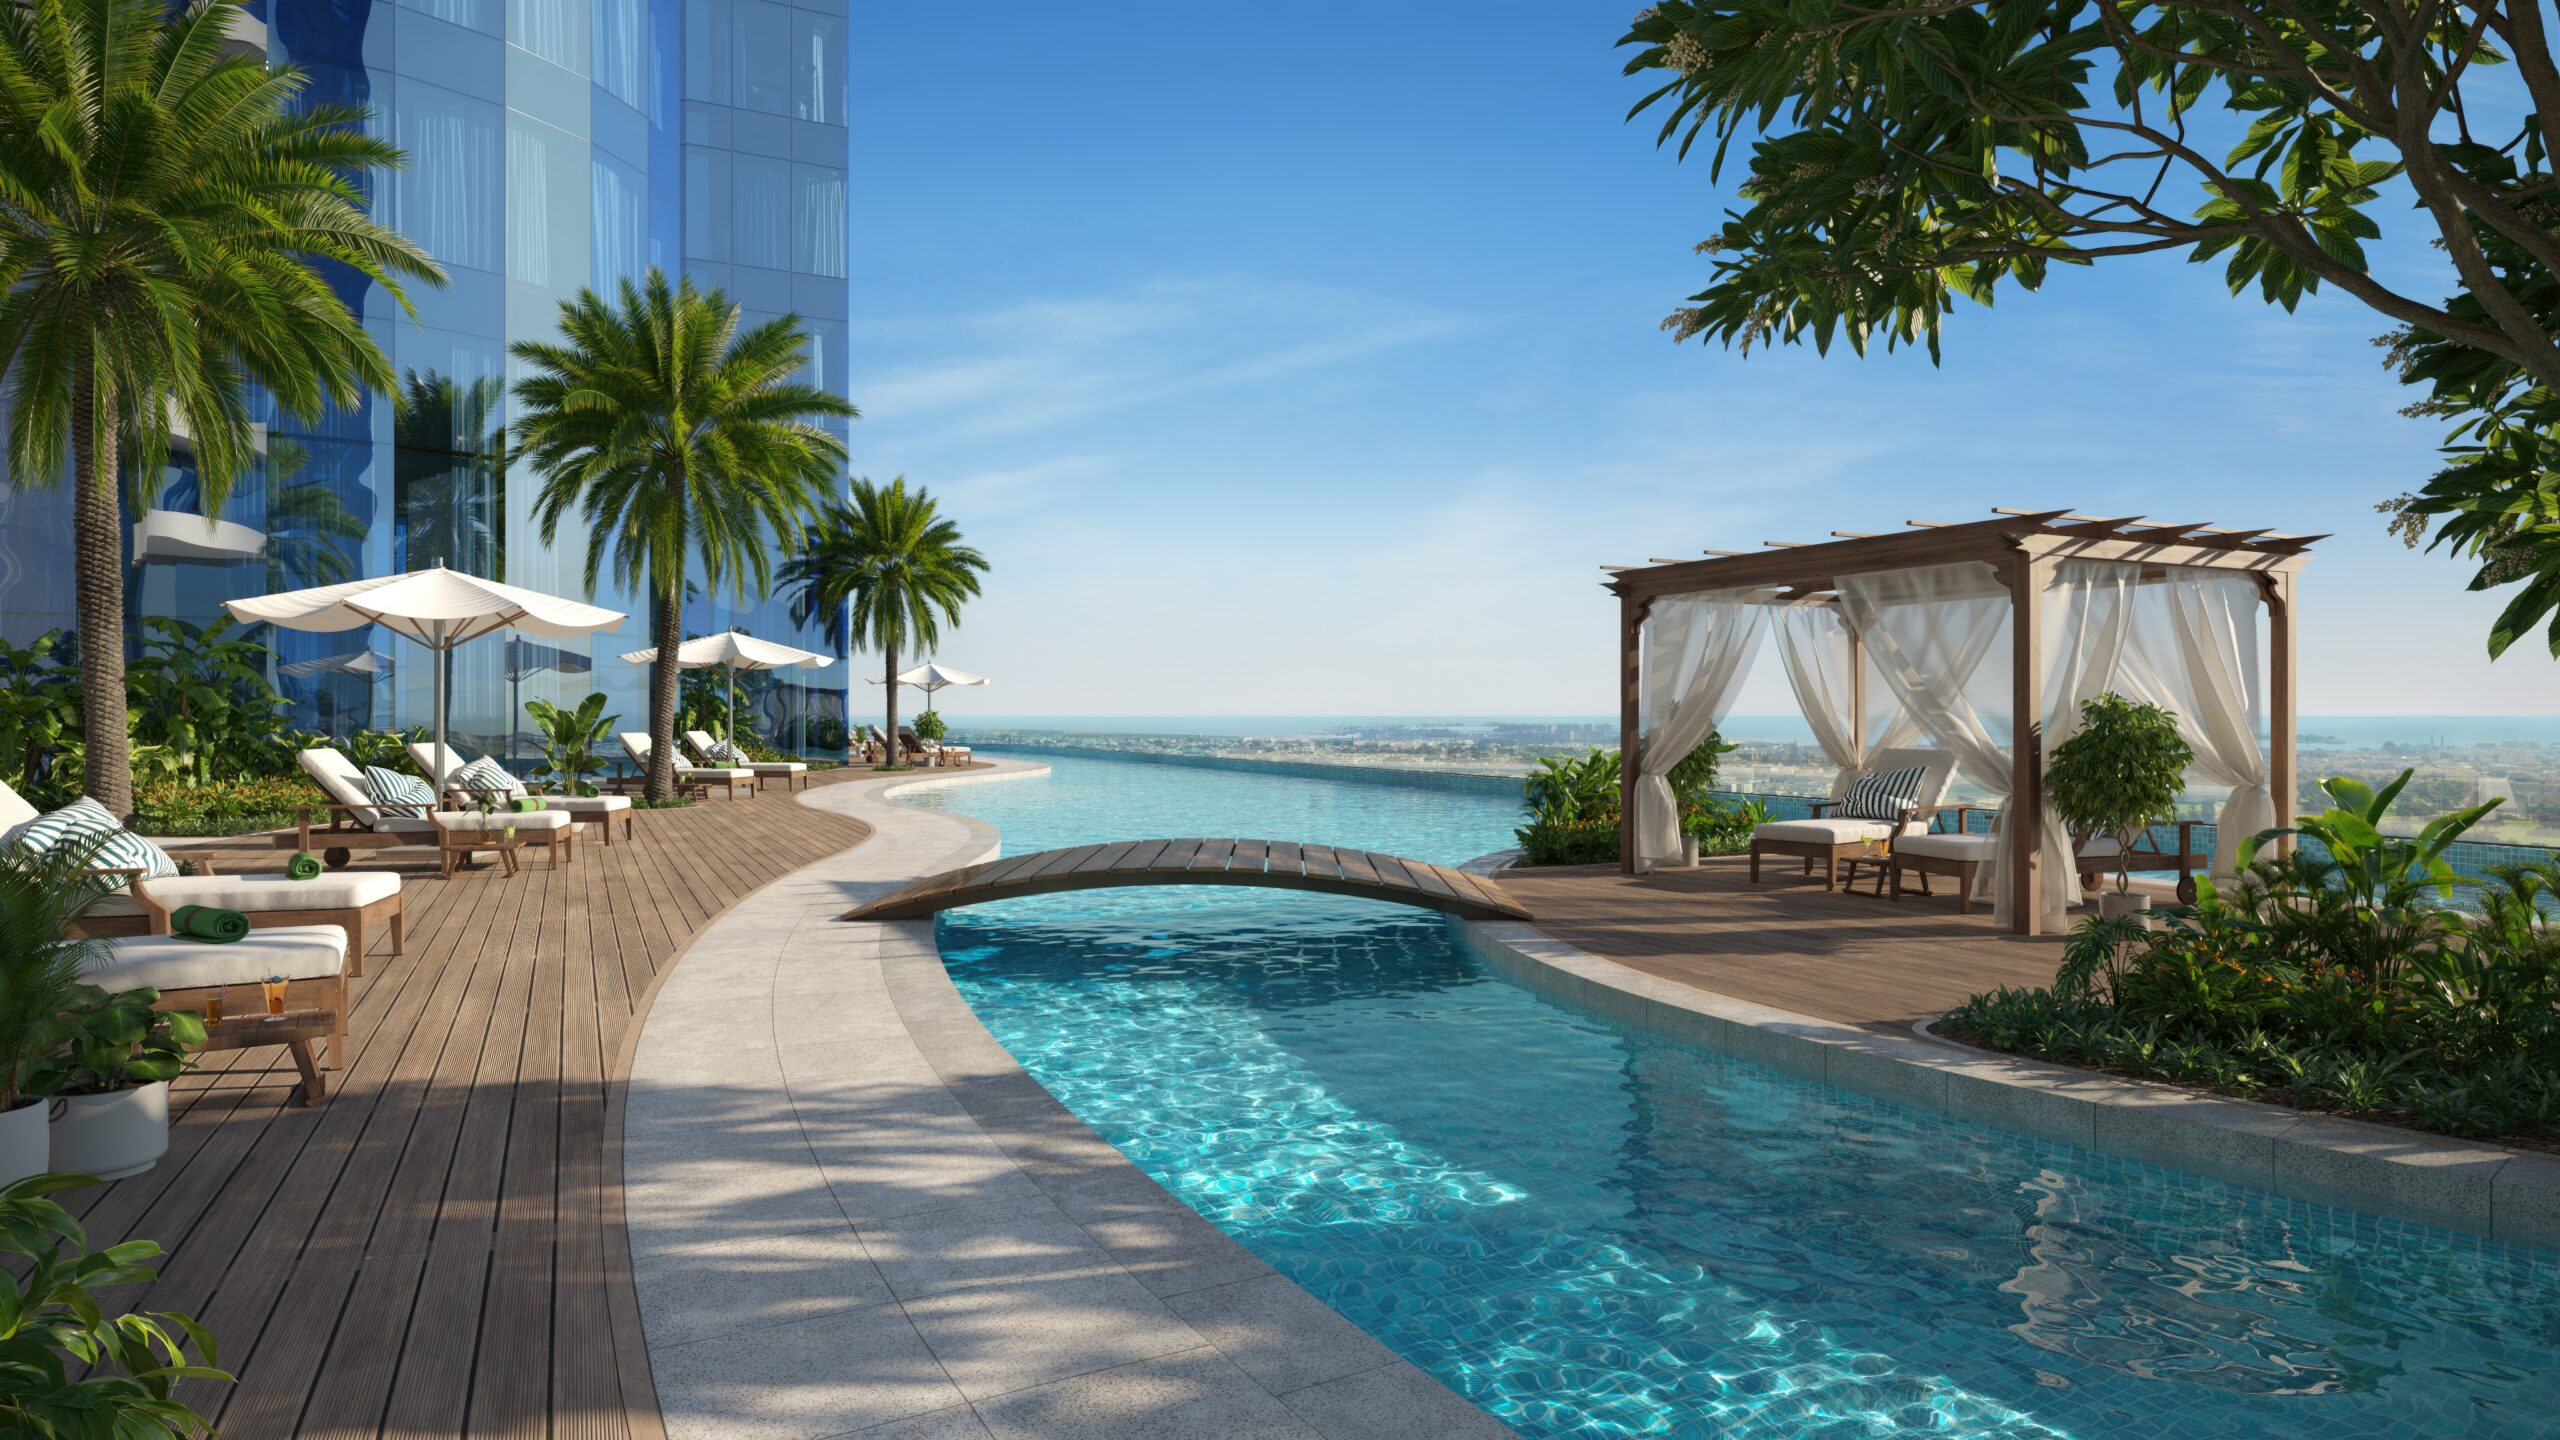 Pool with 270 degree views of the Dubai skyline